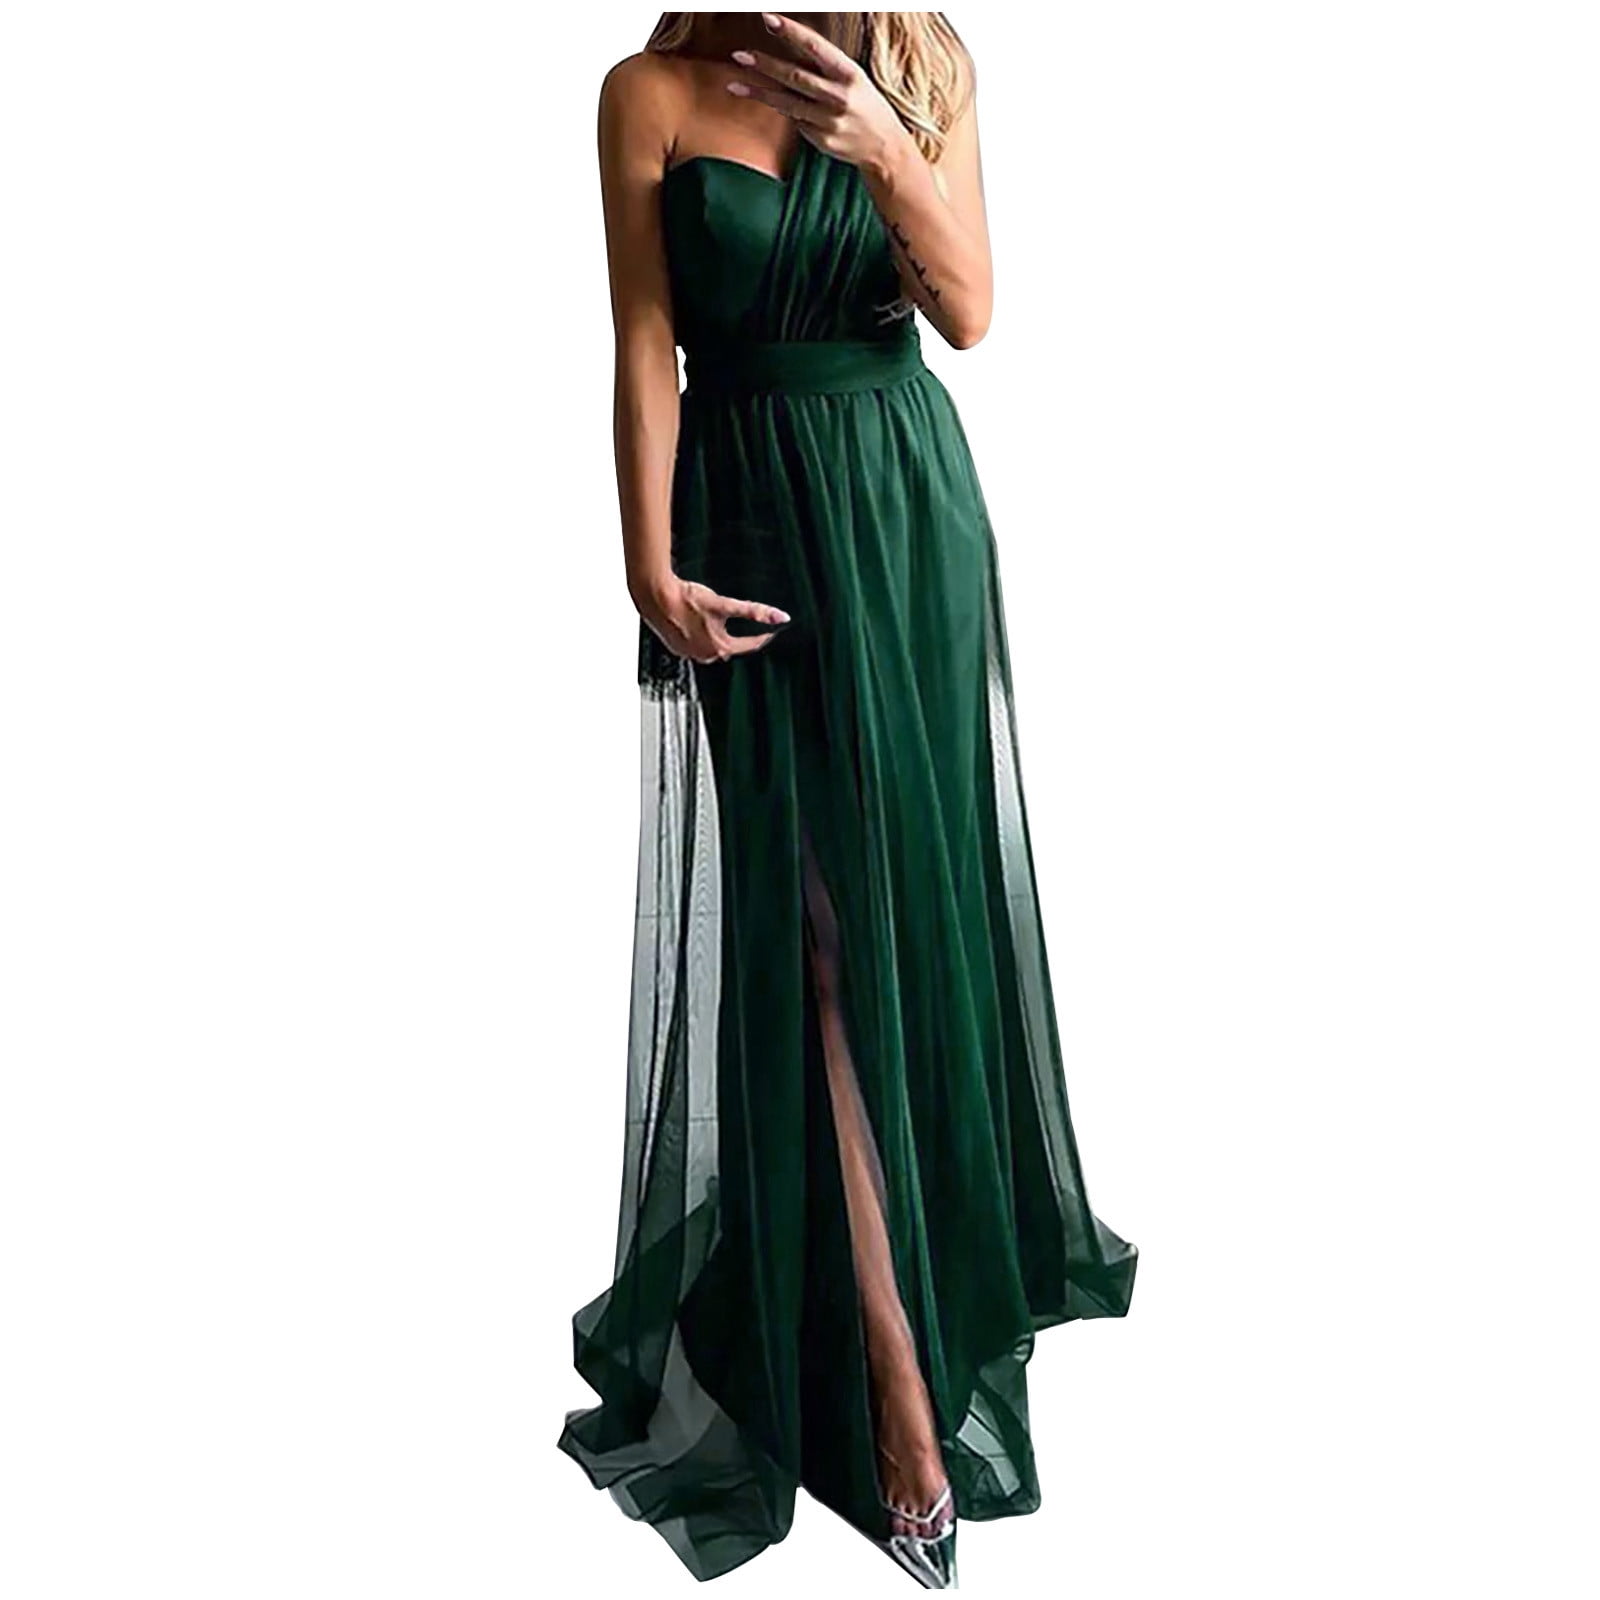 LWZWM Modest Dresses for Women Fitted Dress Sleeveless Round Neck One  Shoulder Long Travel Dress Mom Birthday Gifts Green M 